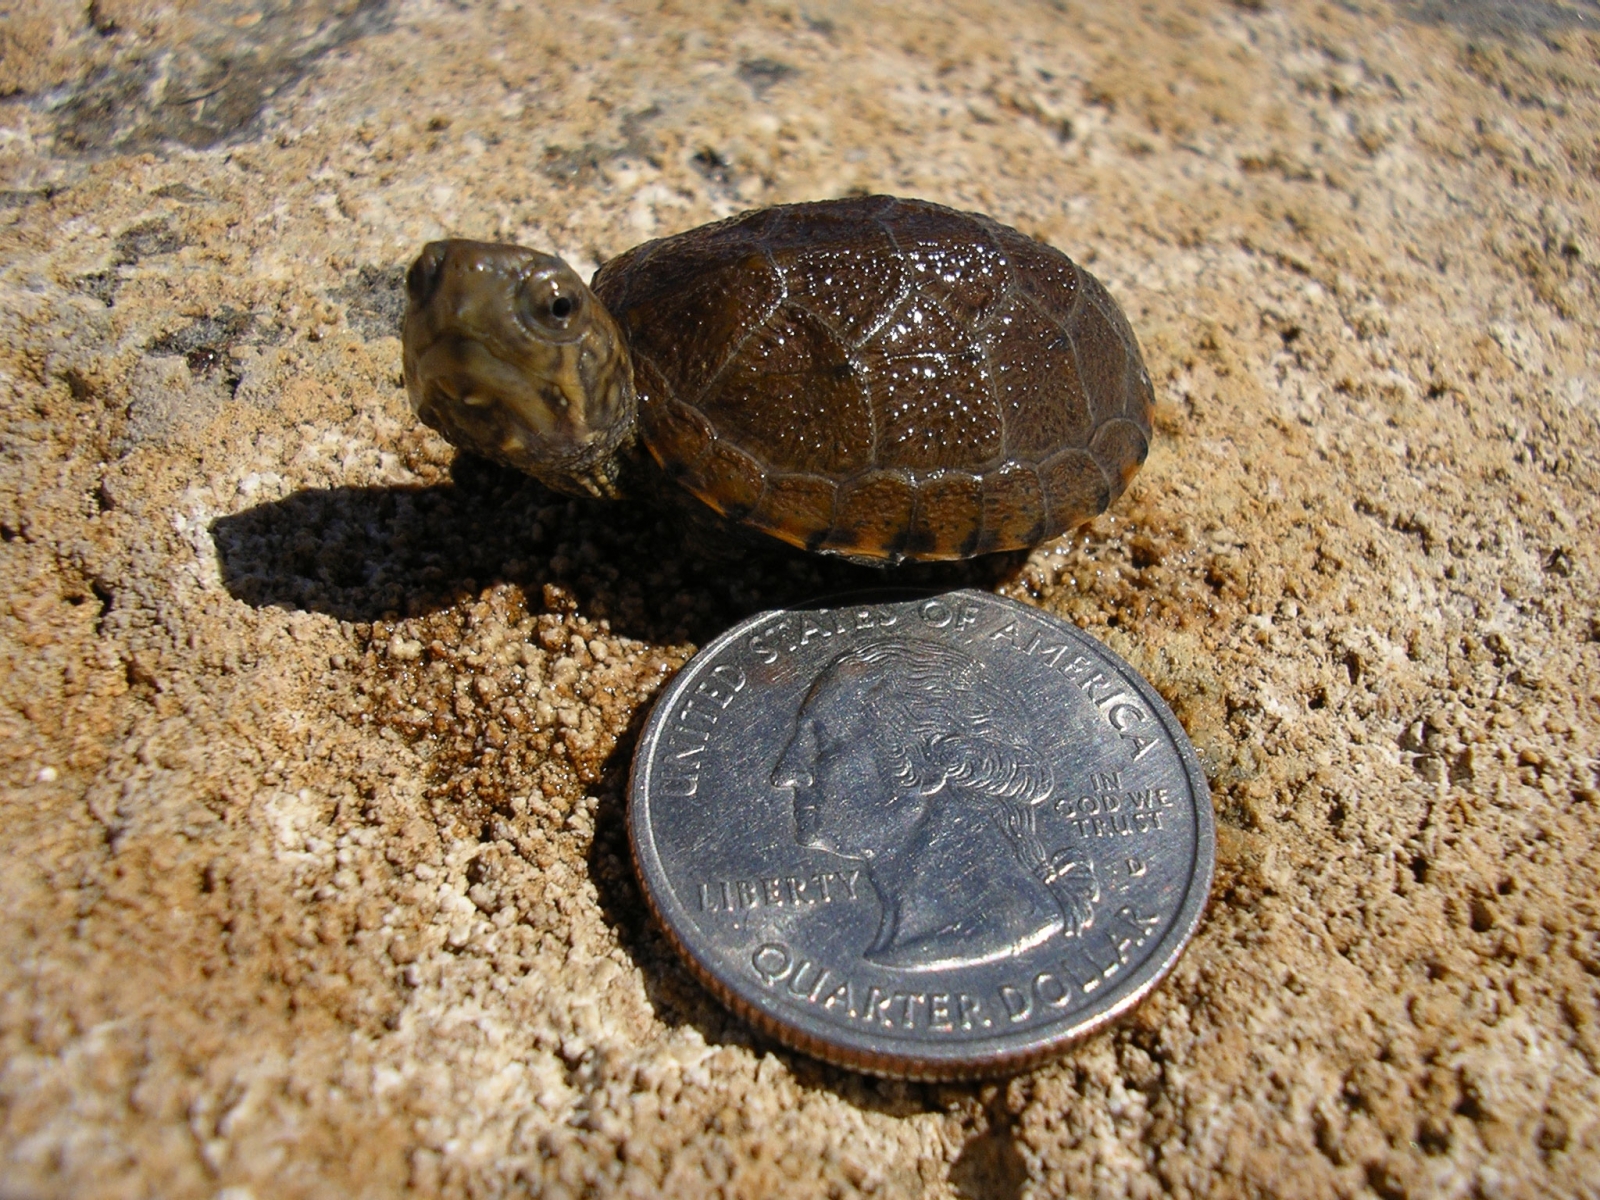 Hatchling sonora mud turtle